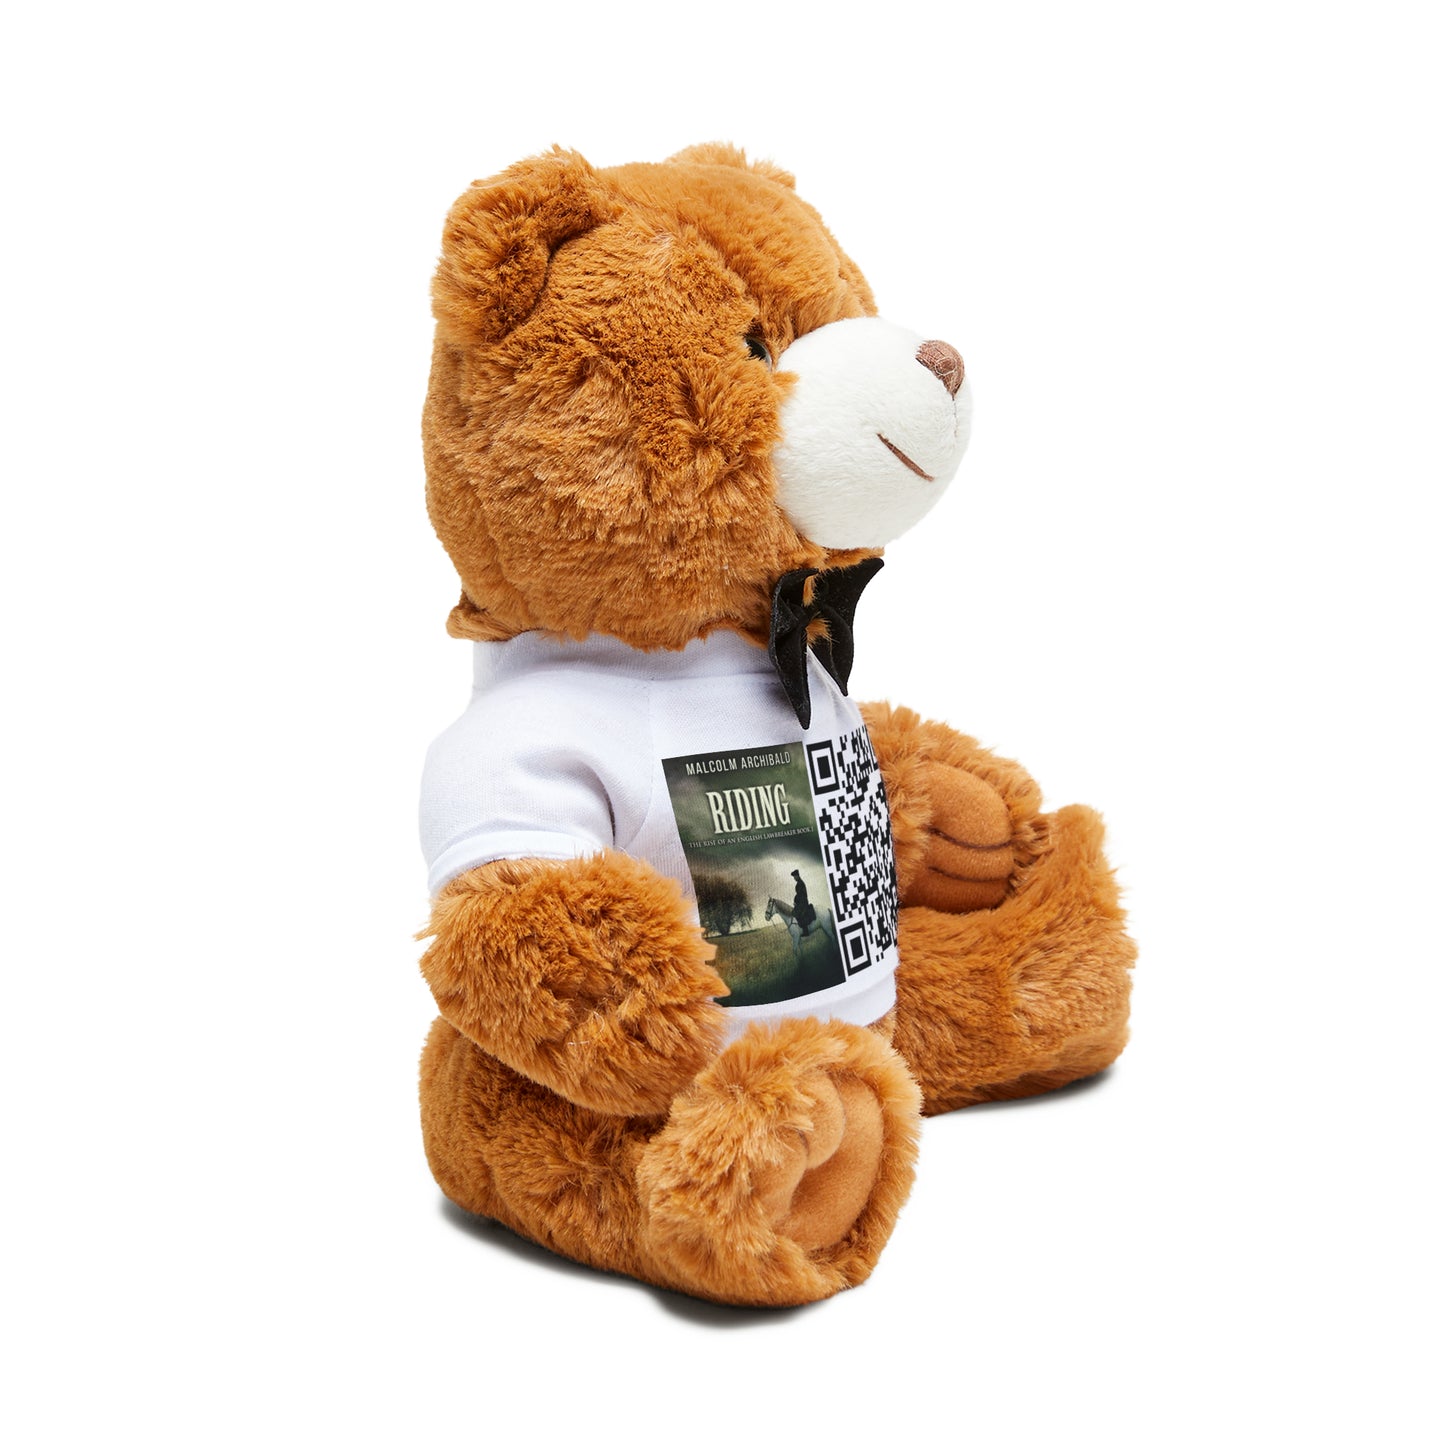 Riding - Teddy Bear